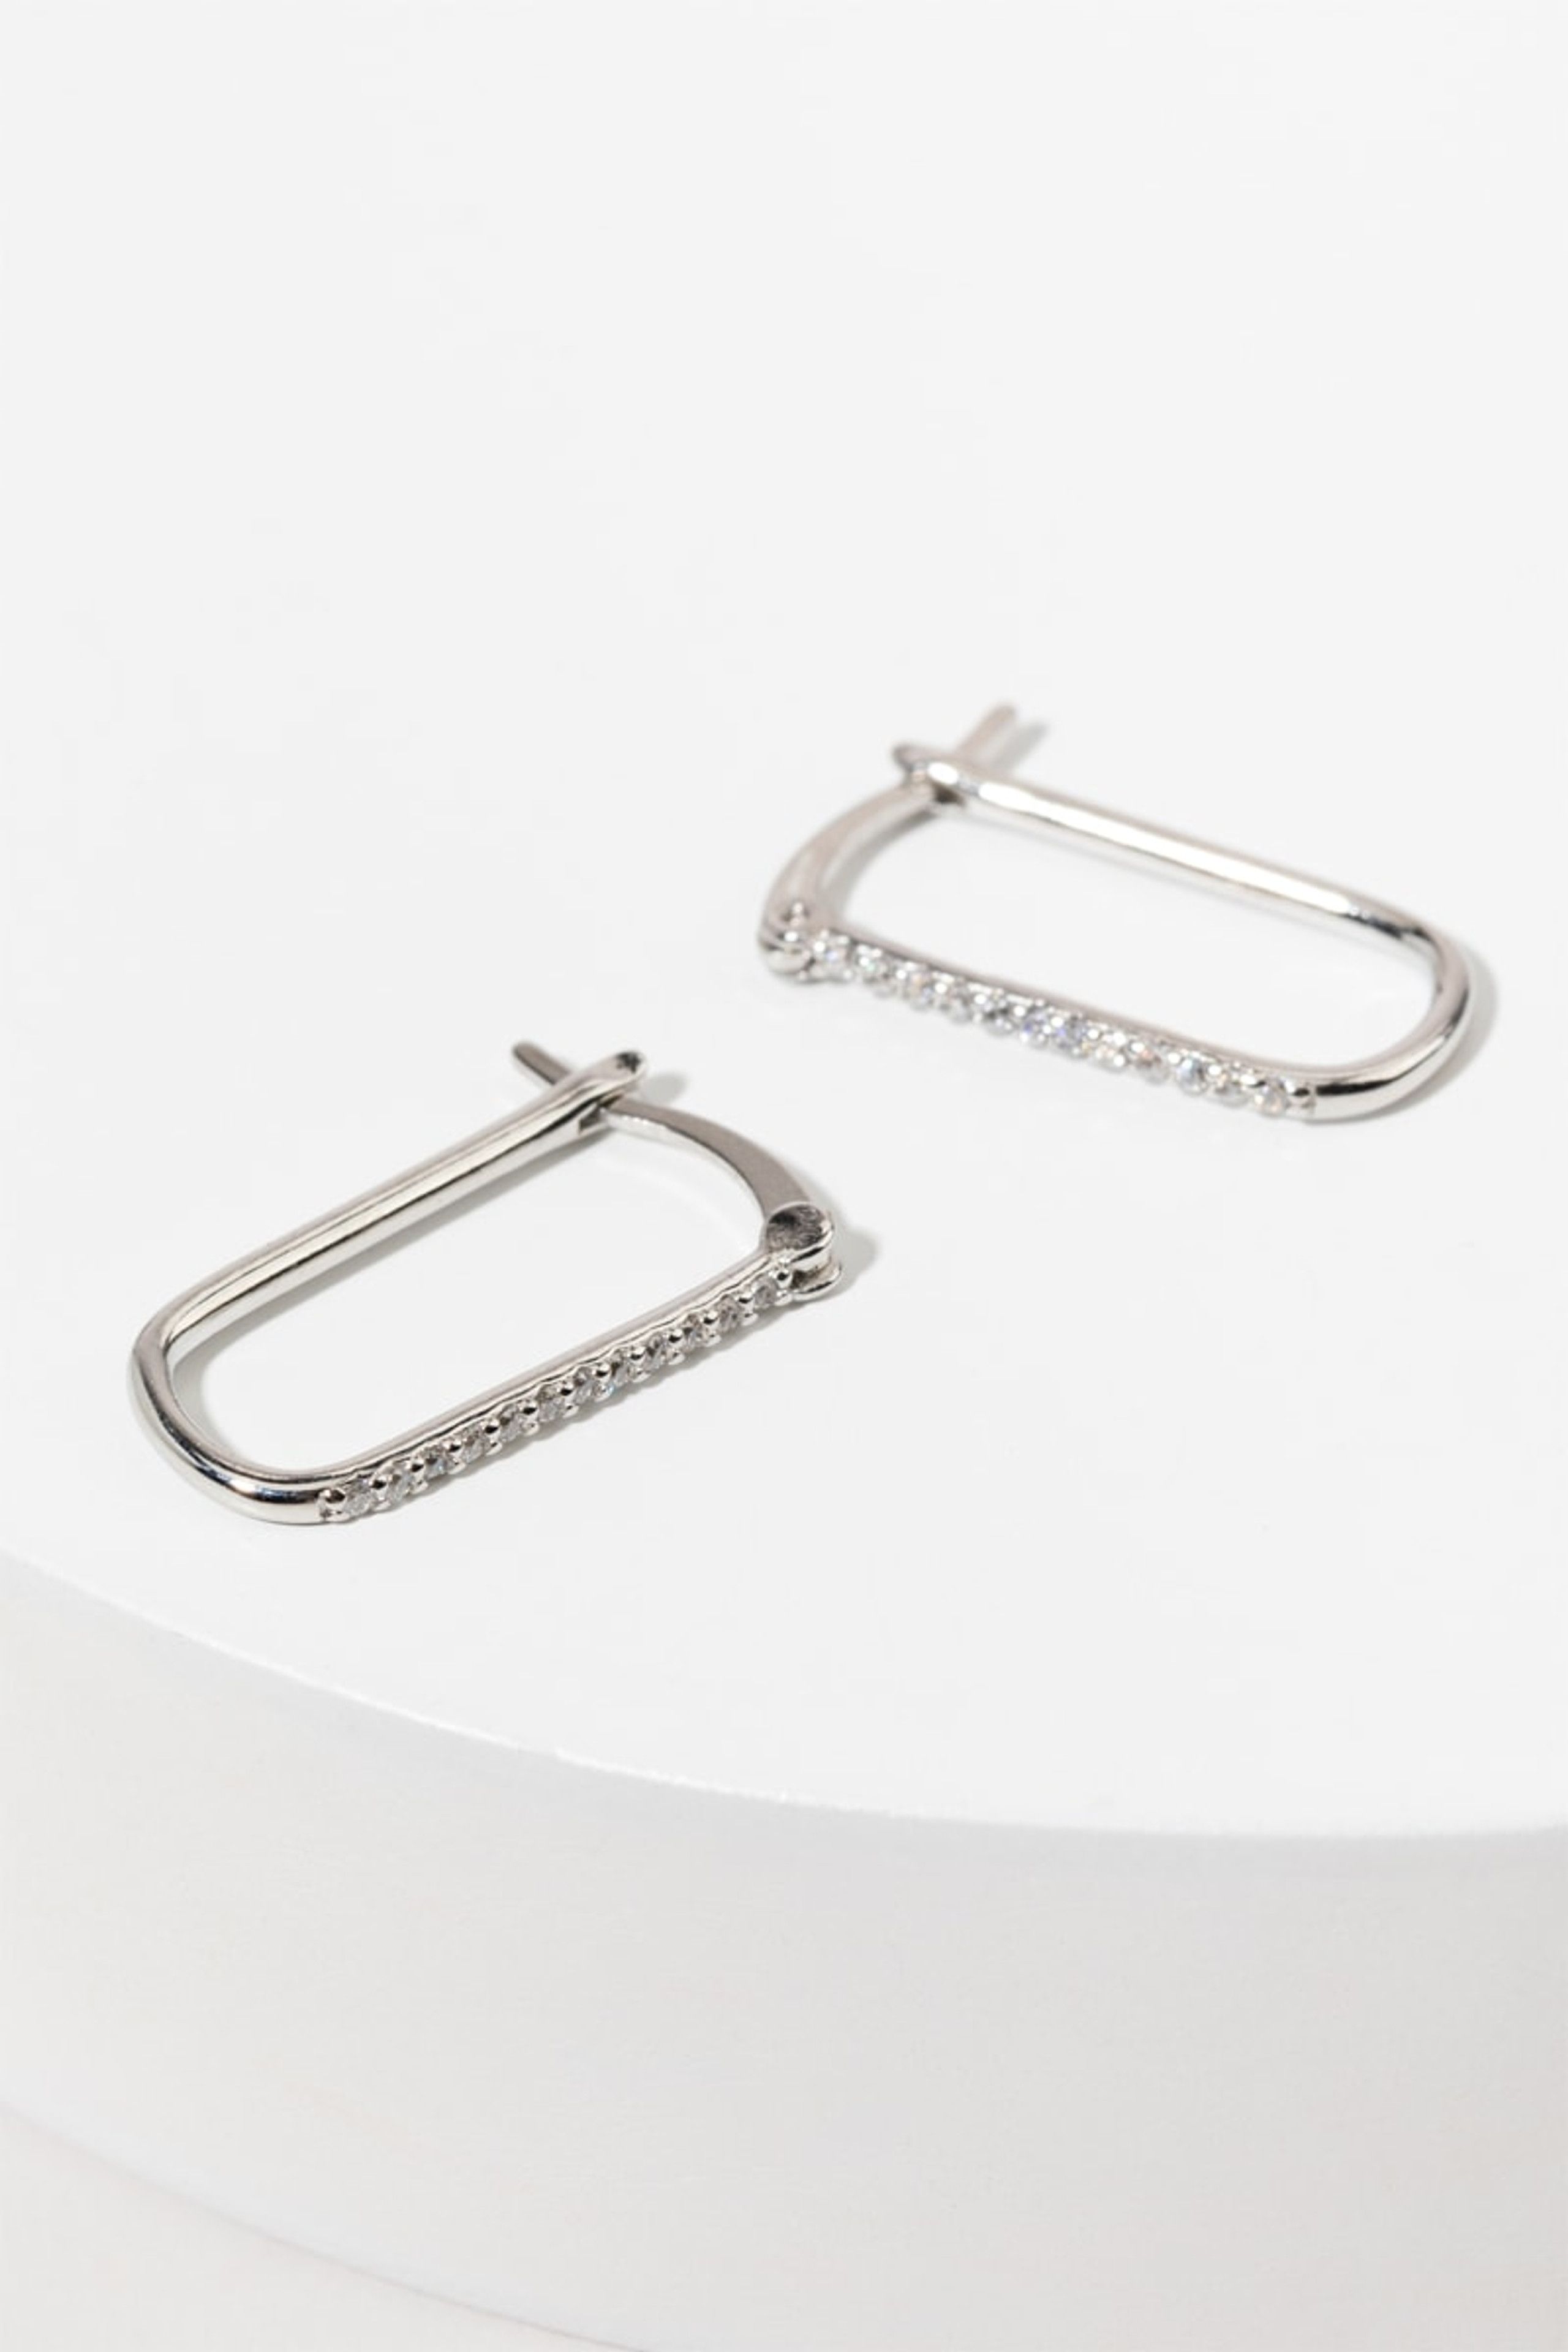 Llaria Sterling Silver Pave CZ Oblong Hoop Earrings | Francesca's